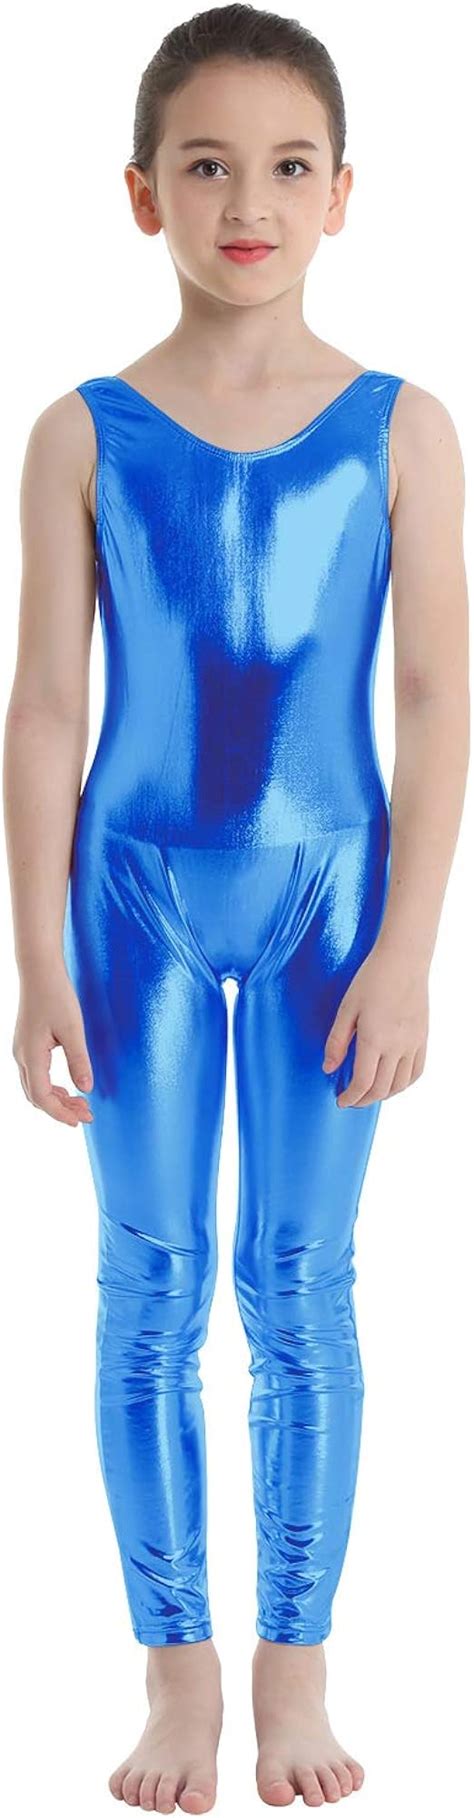 Tiaobug Kids Metallic Sleevelesslong Sleeve Full Bodysuit Unitard